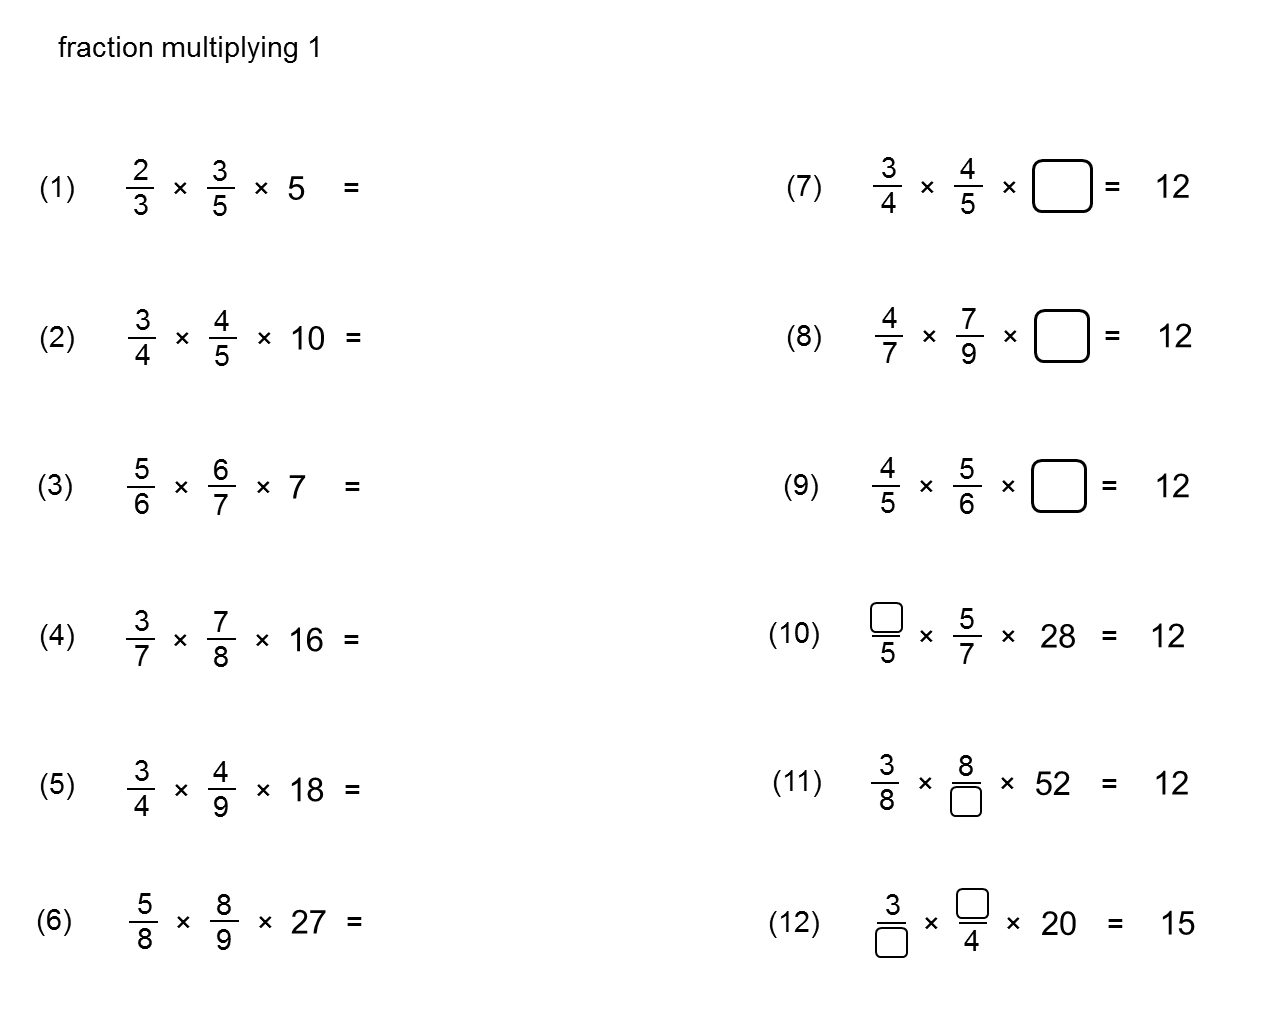 median-don-steward-mathematics-teaching-fraction-multiplication-2